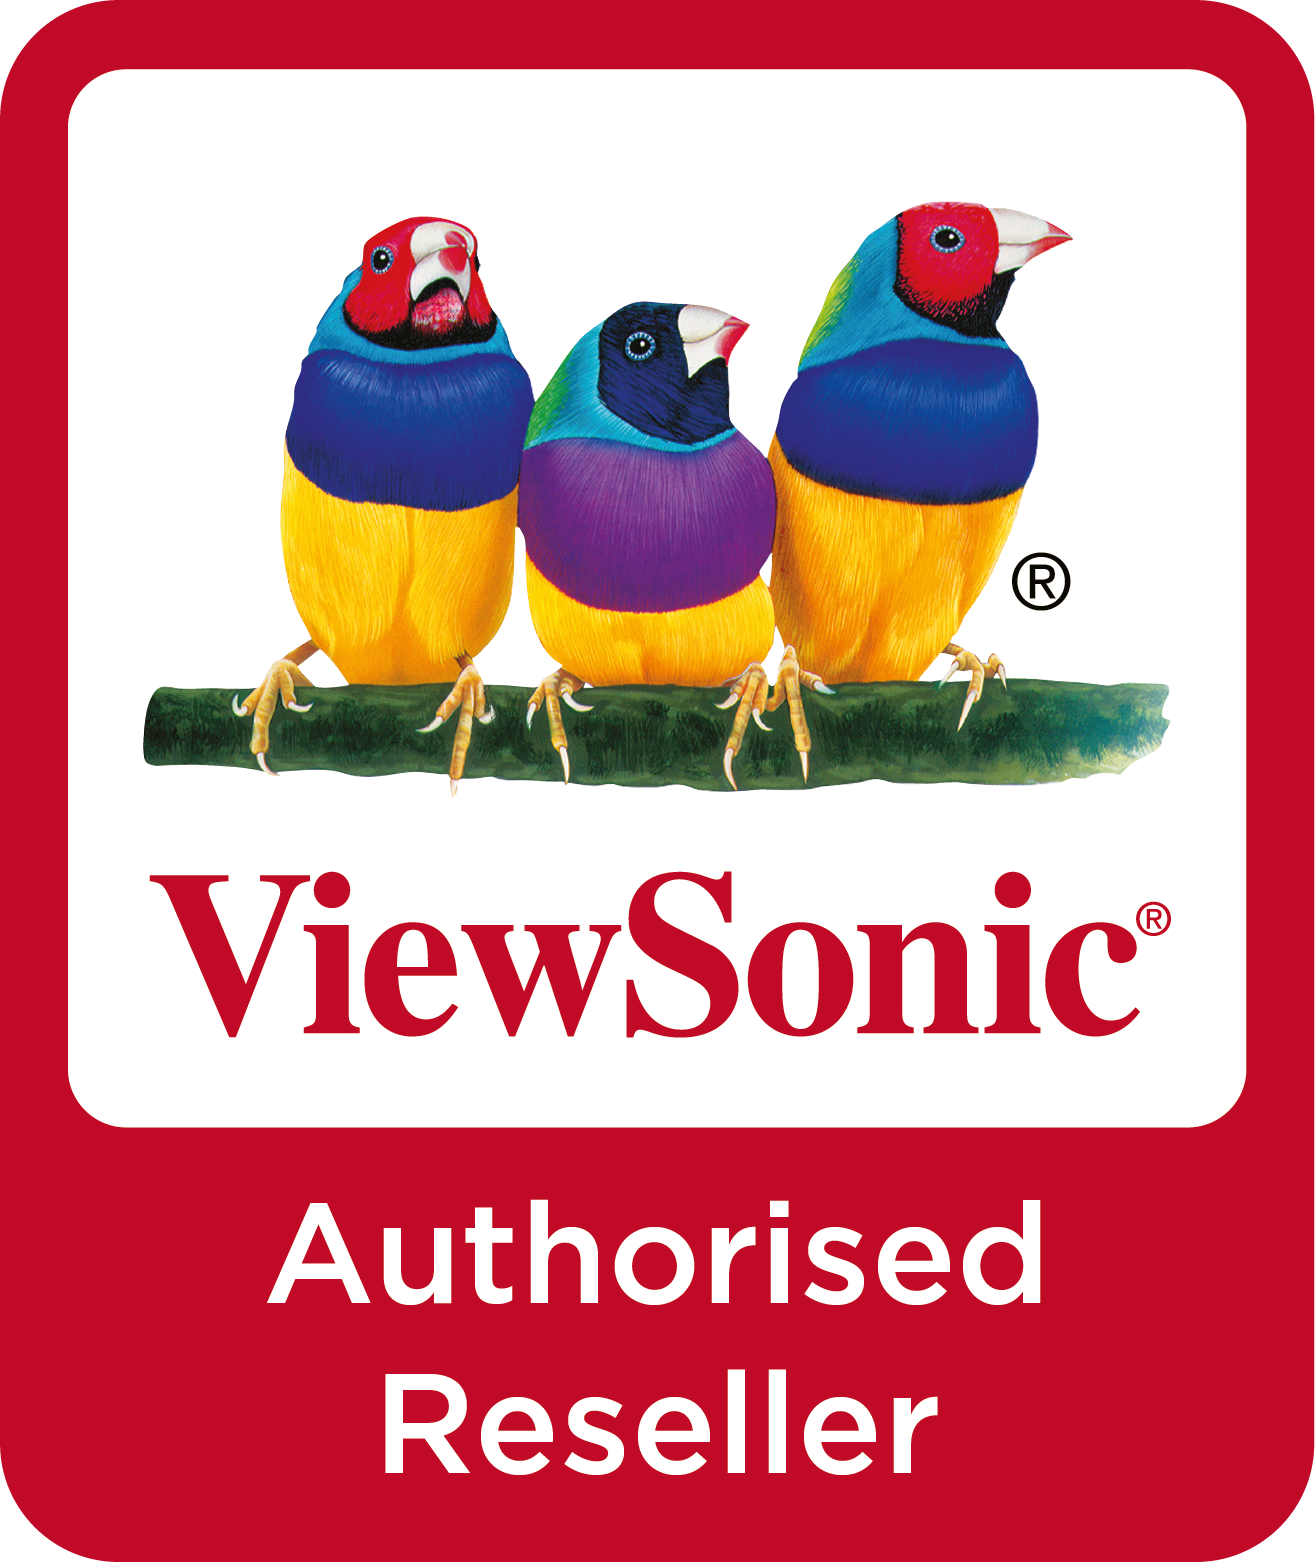 ViewSonic Authorised Reseller